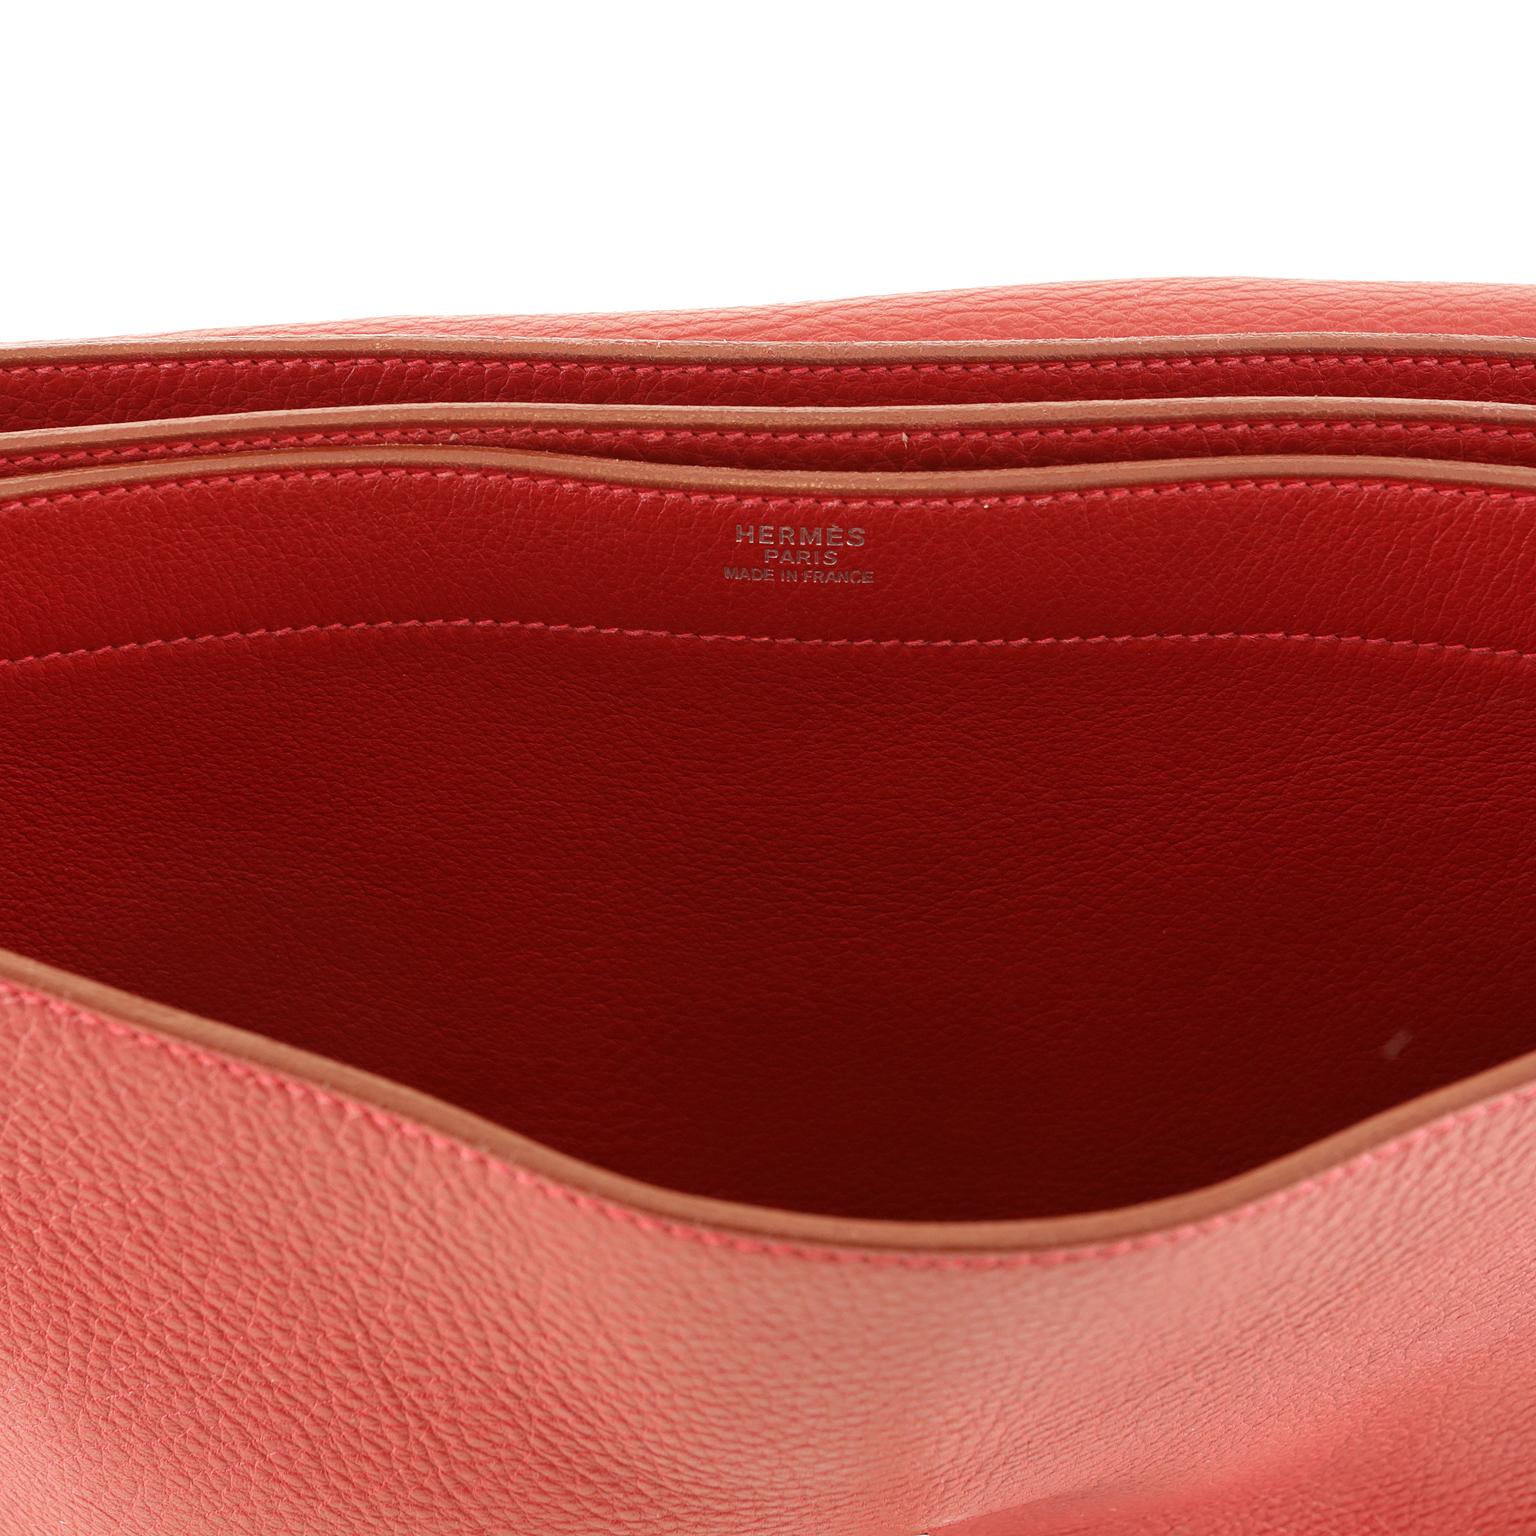 Hermès Red Togo Leather Briefcase  6